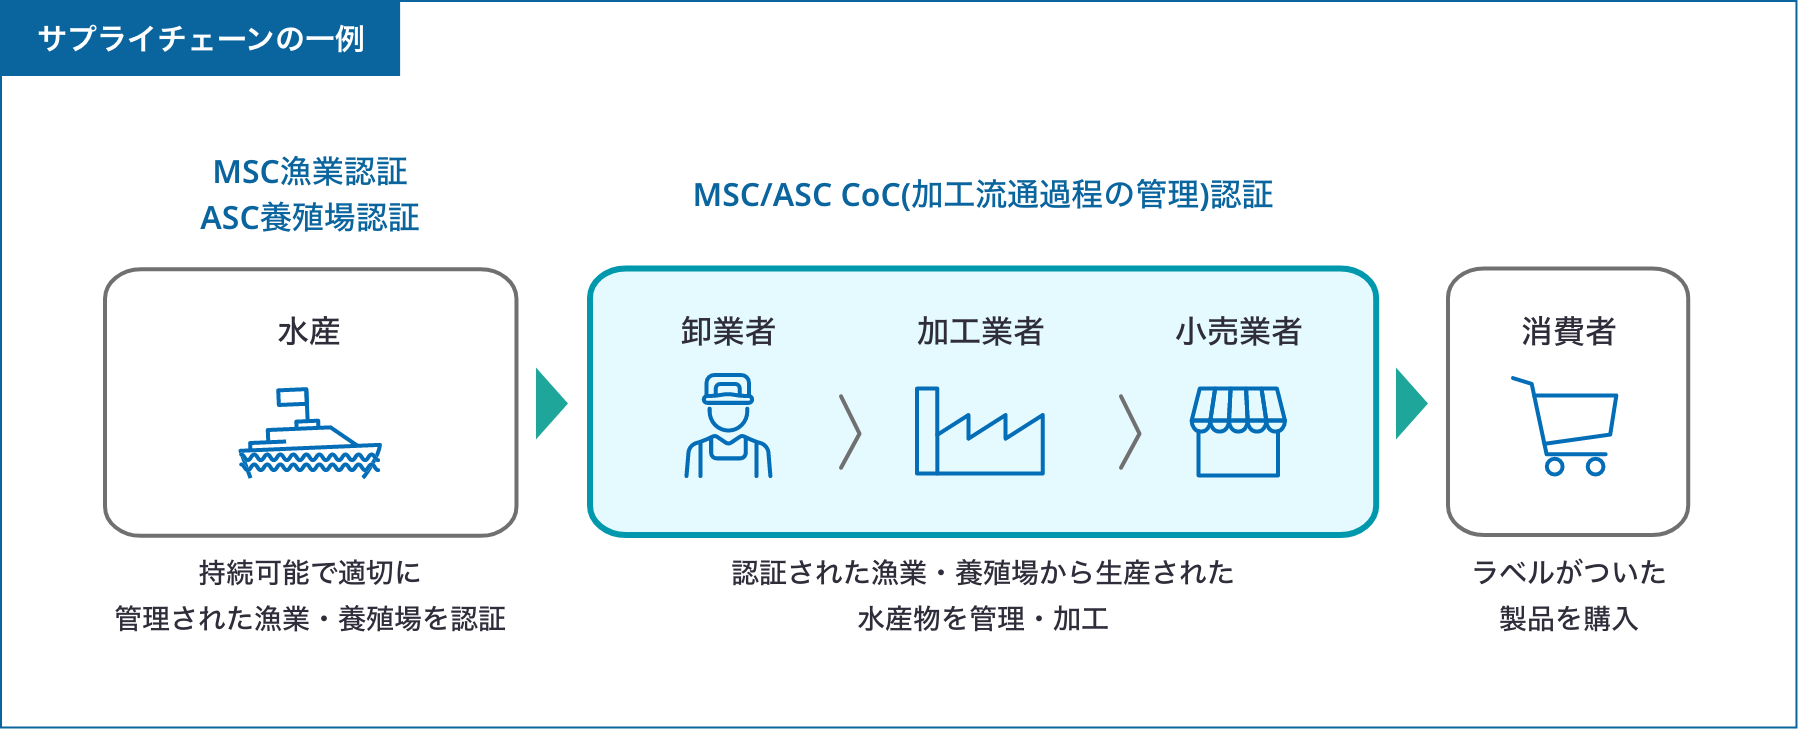 MSC漁業認証・ASC養殖場認証／COC認証